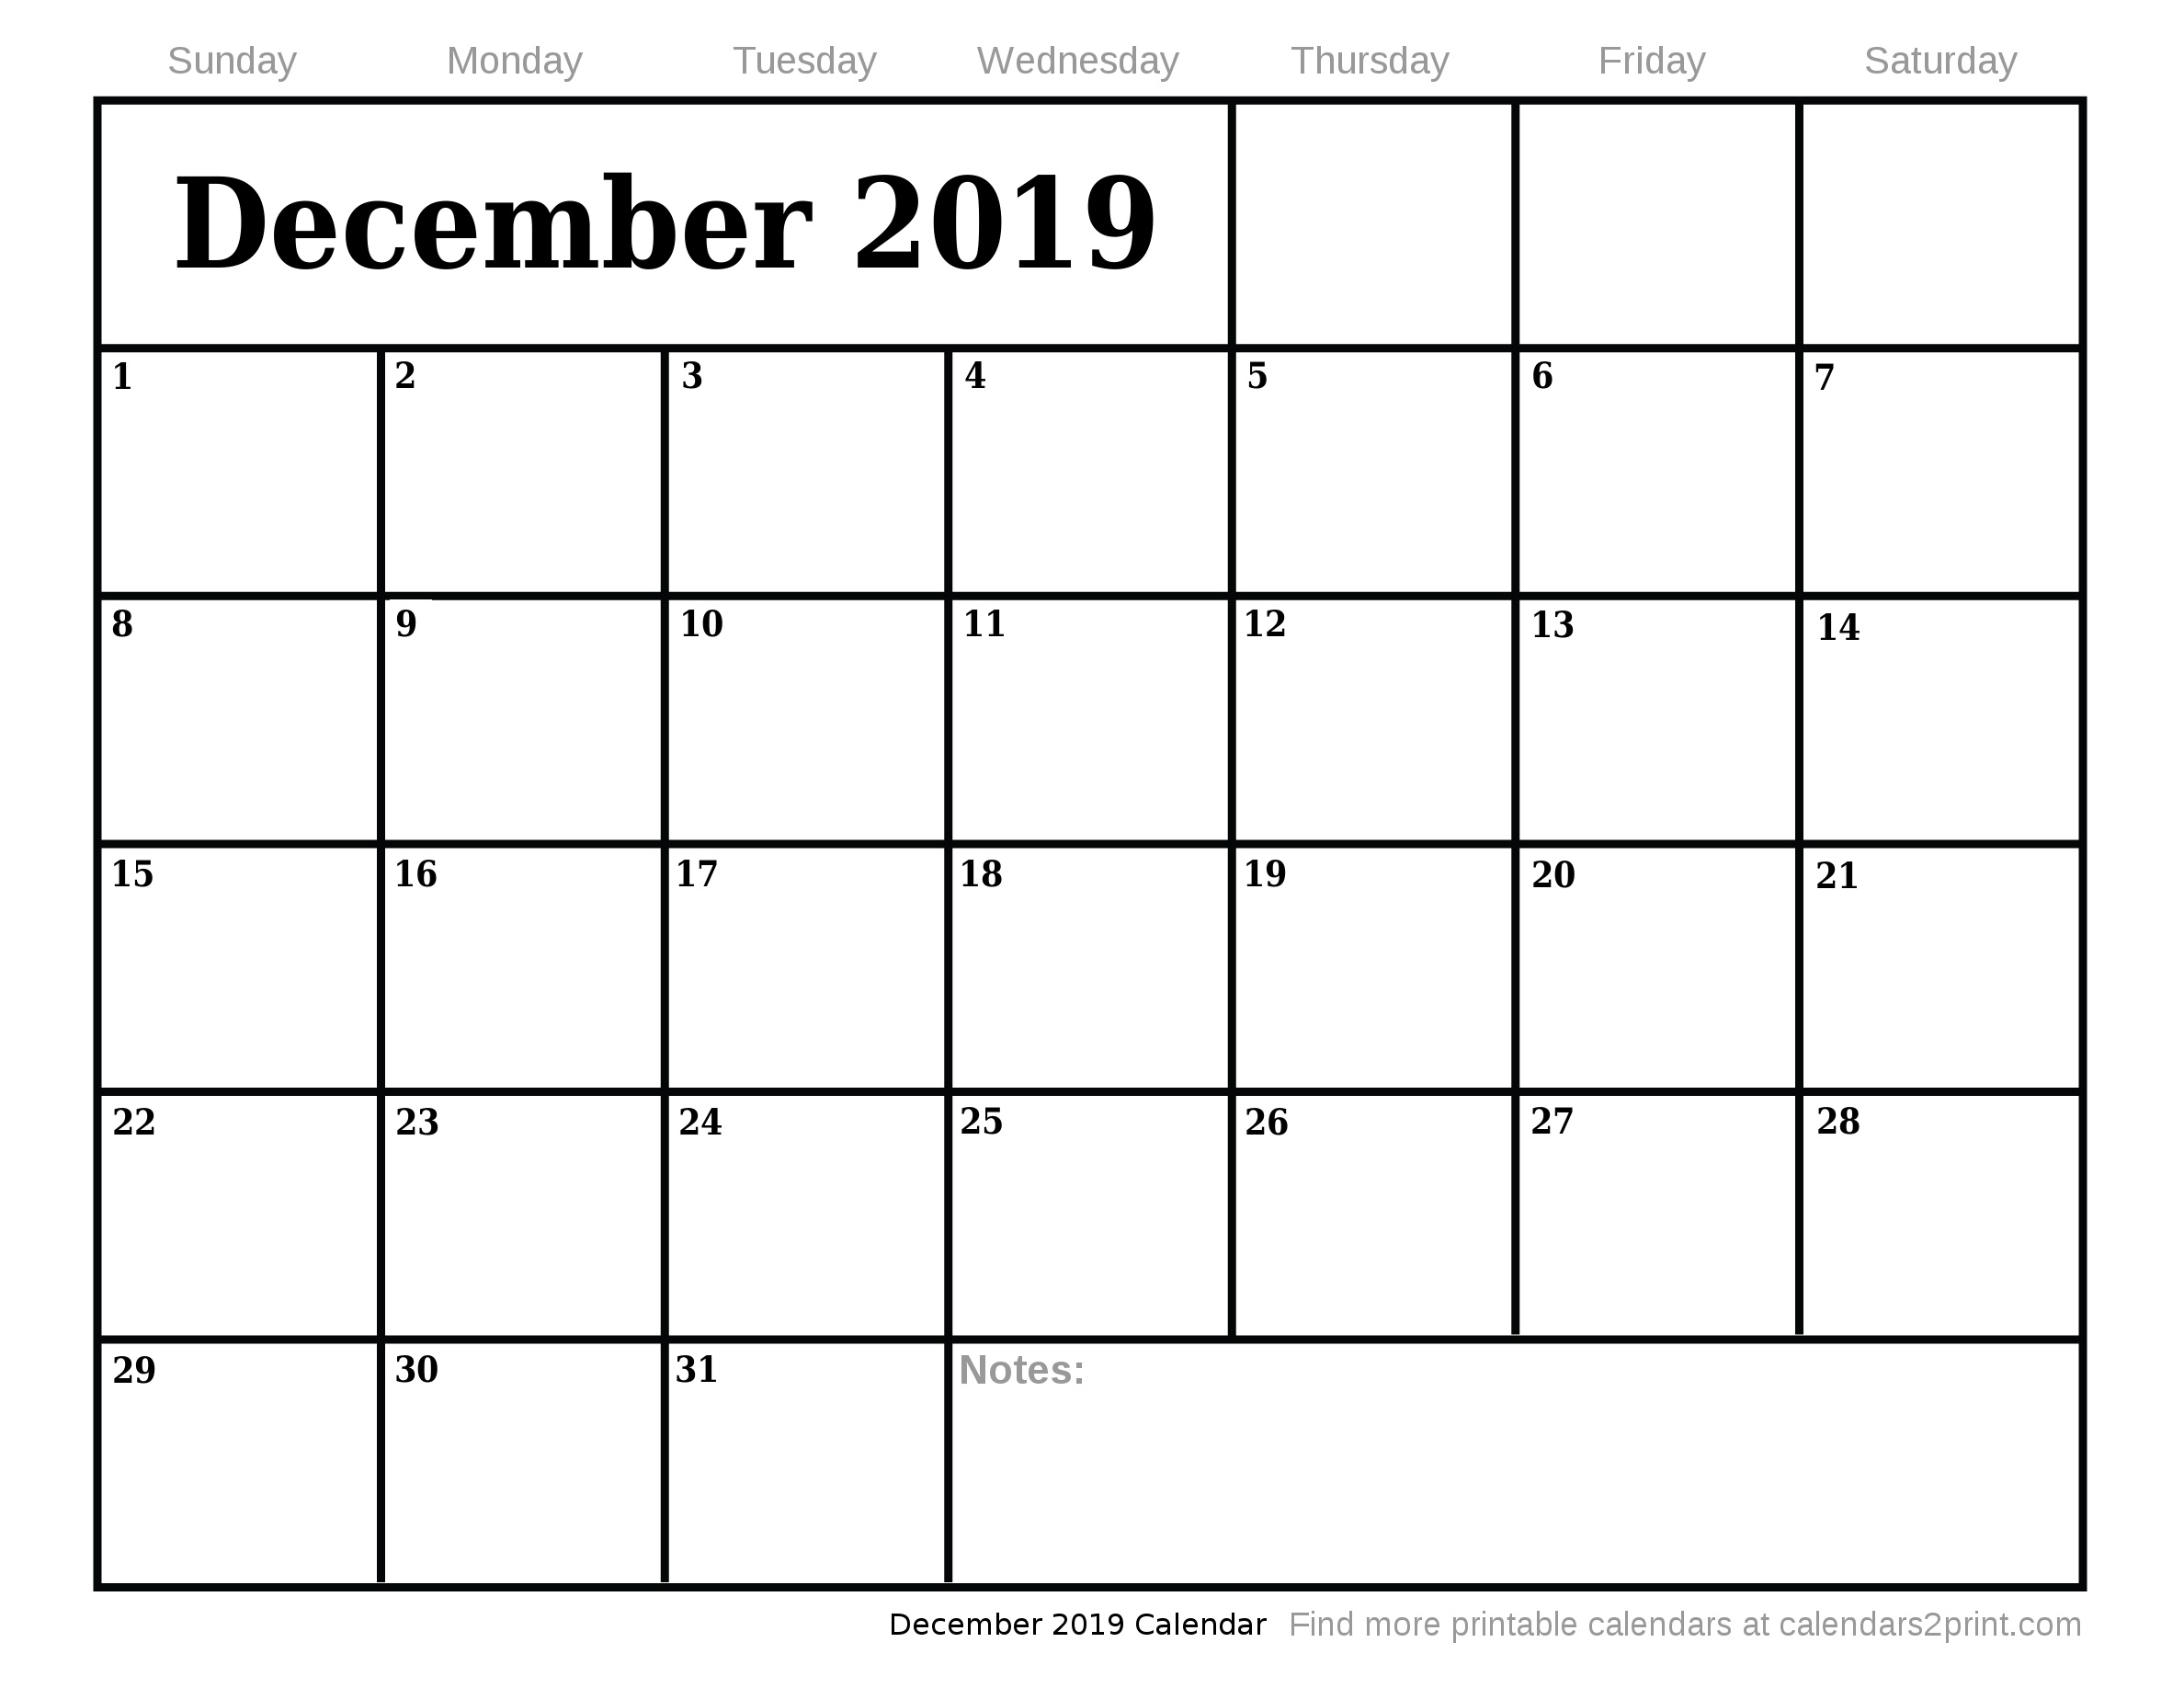 Dec 2019 Printable Calendar